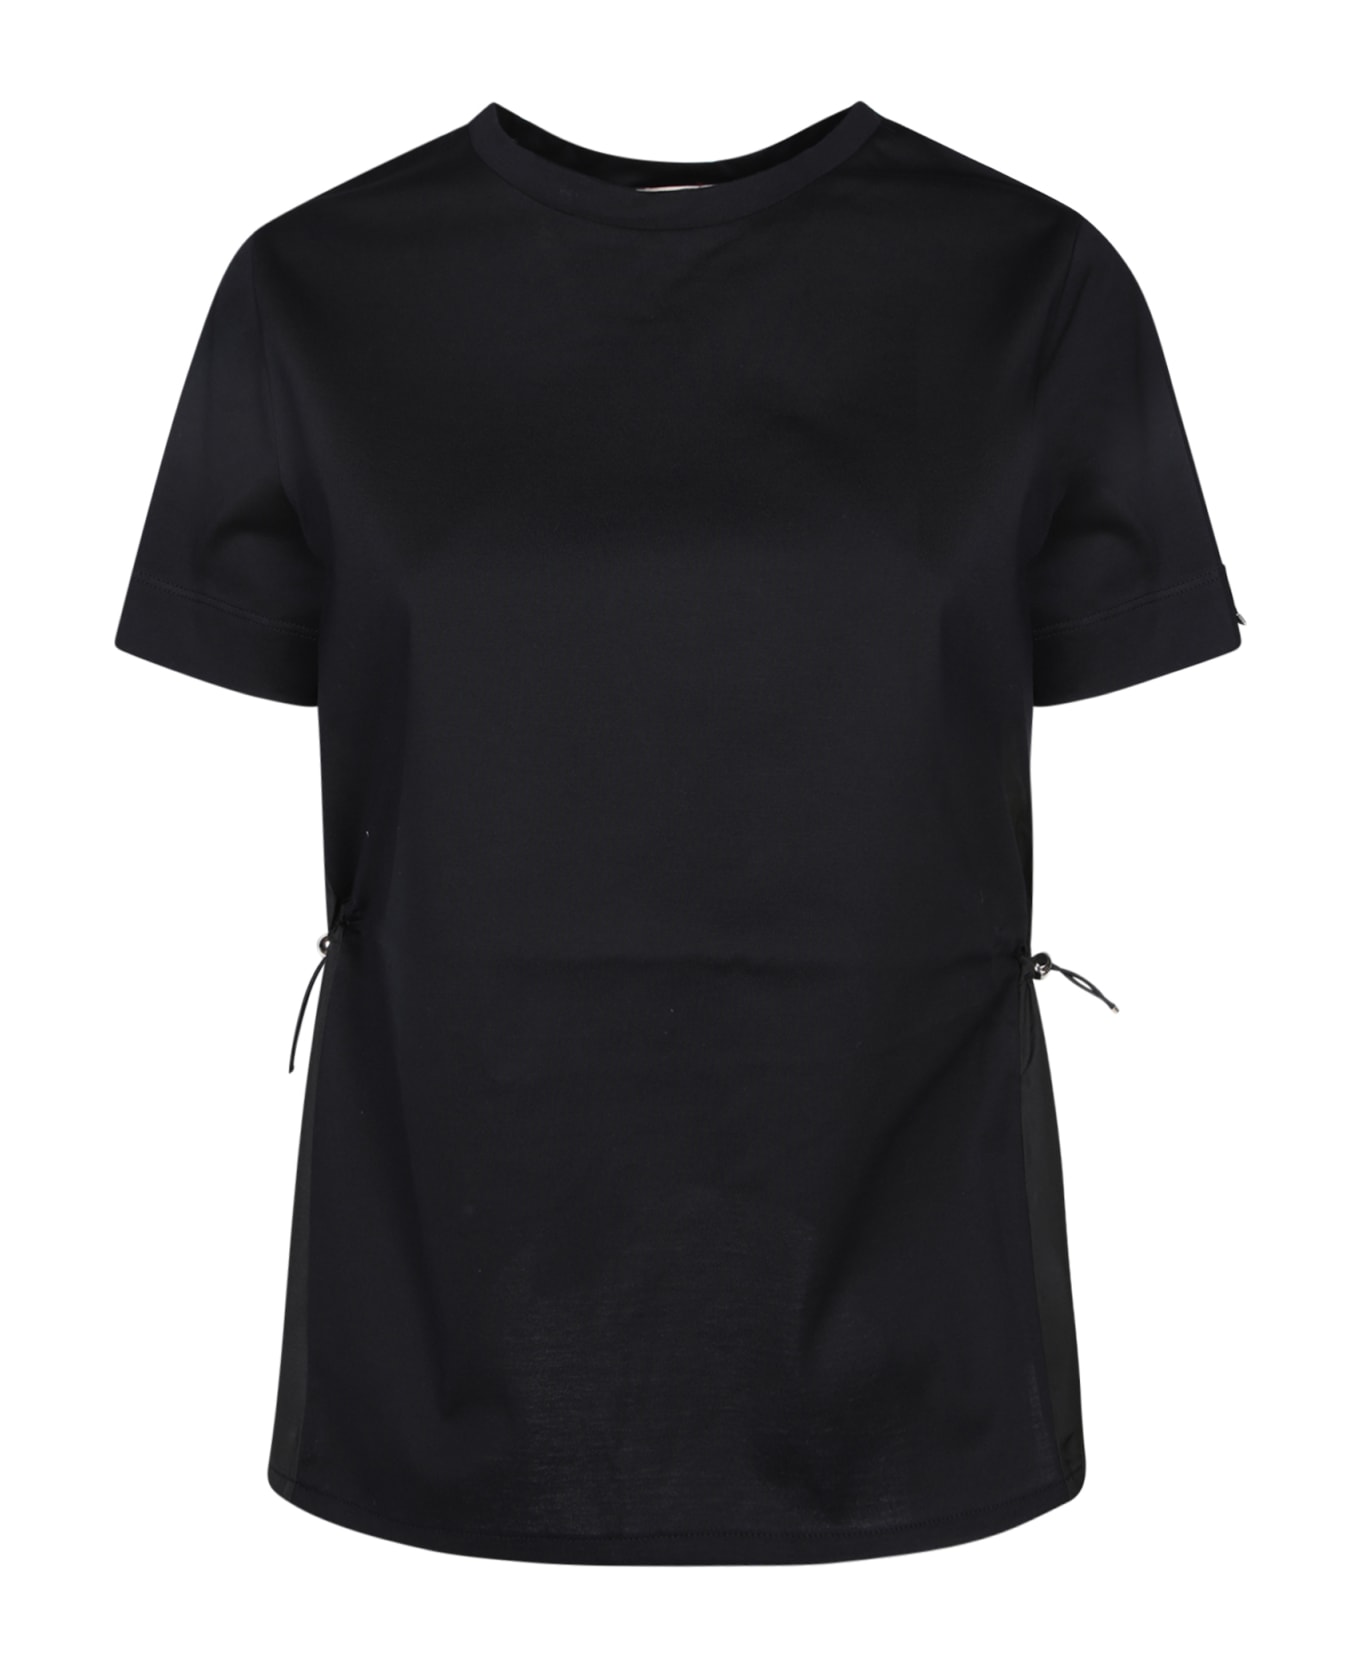 Herno Short Sleeves Black T-shirt - Black